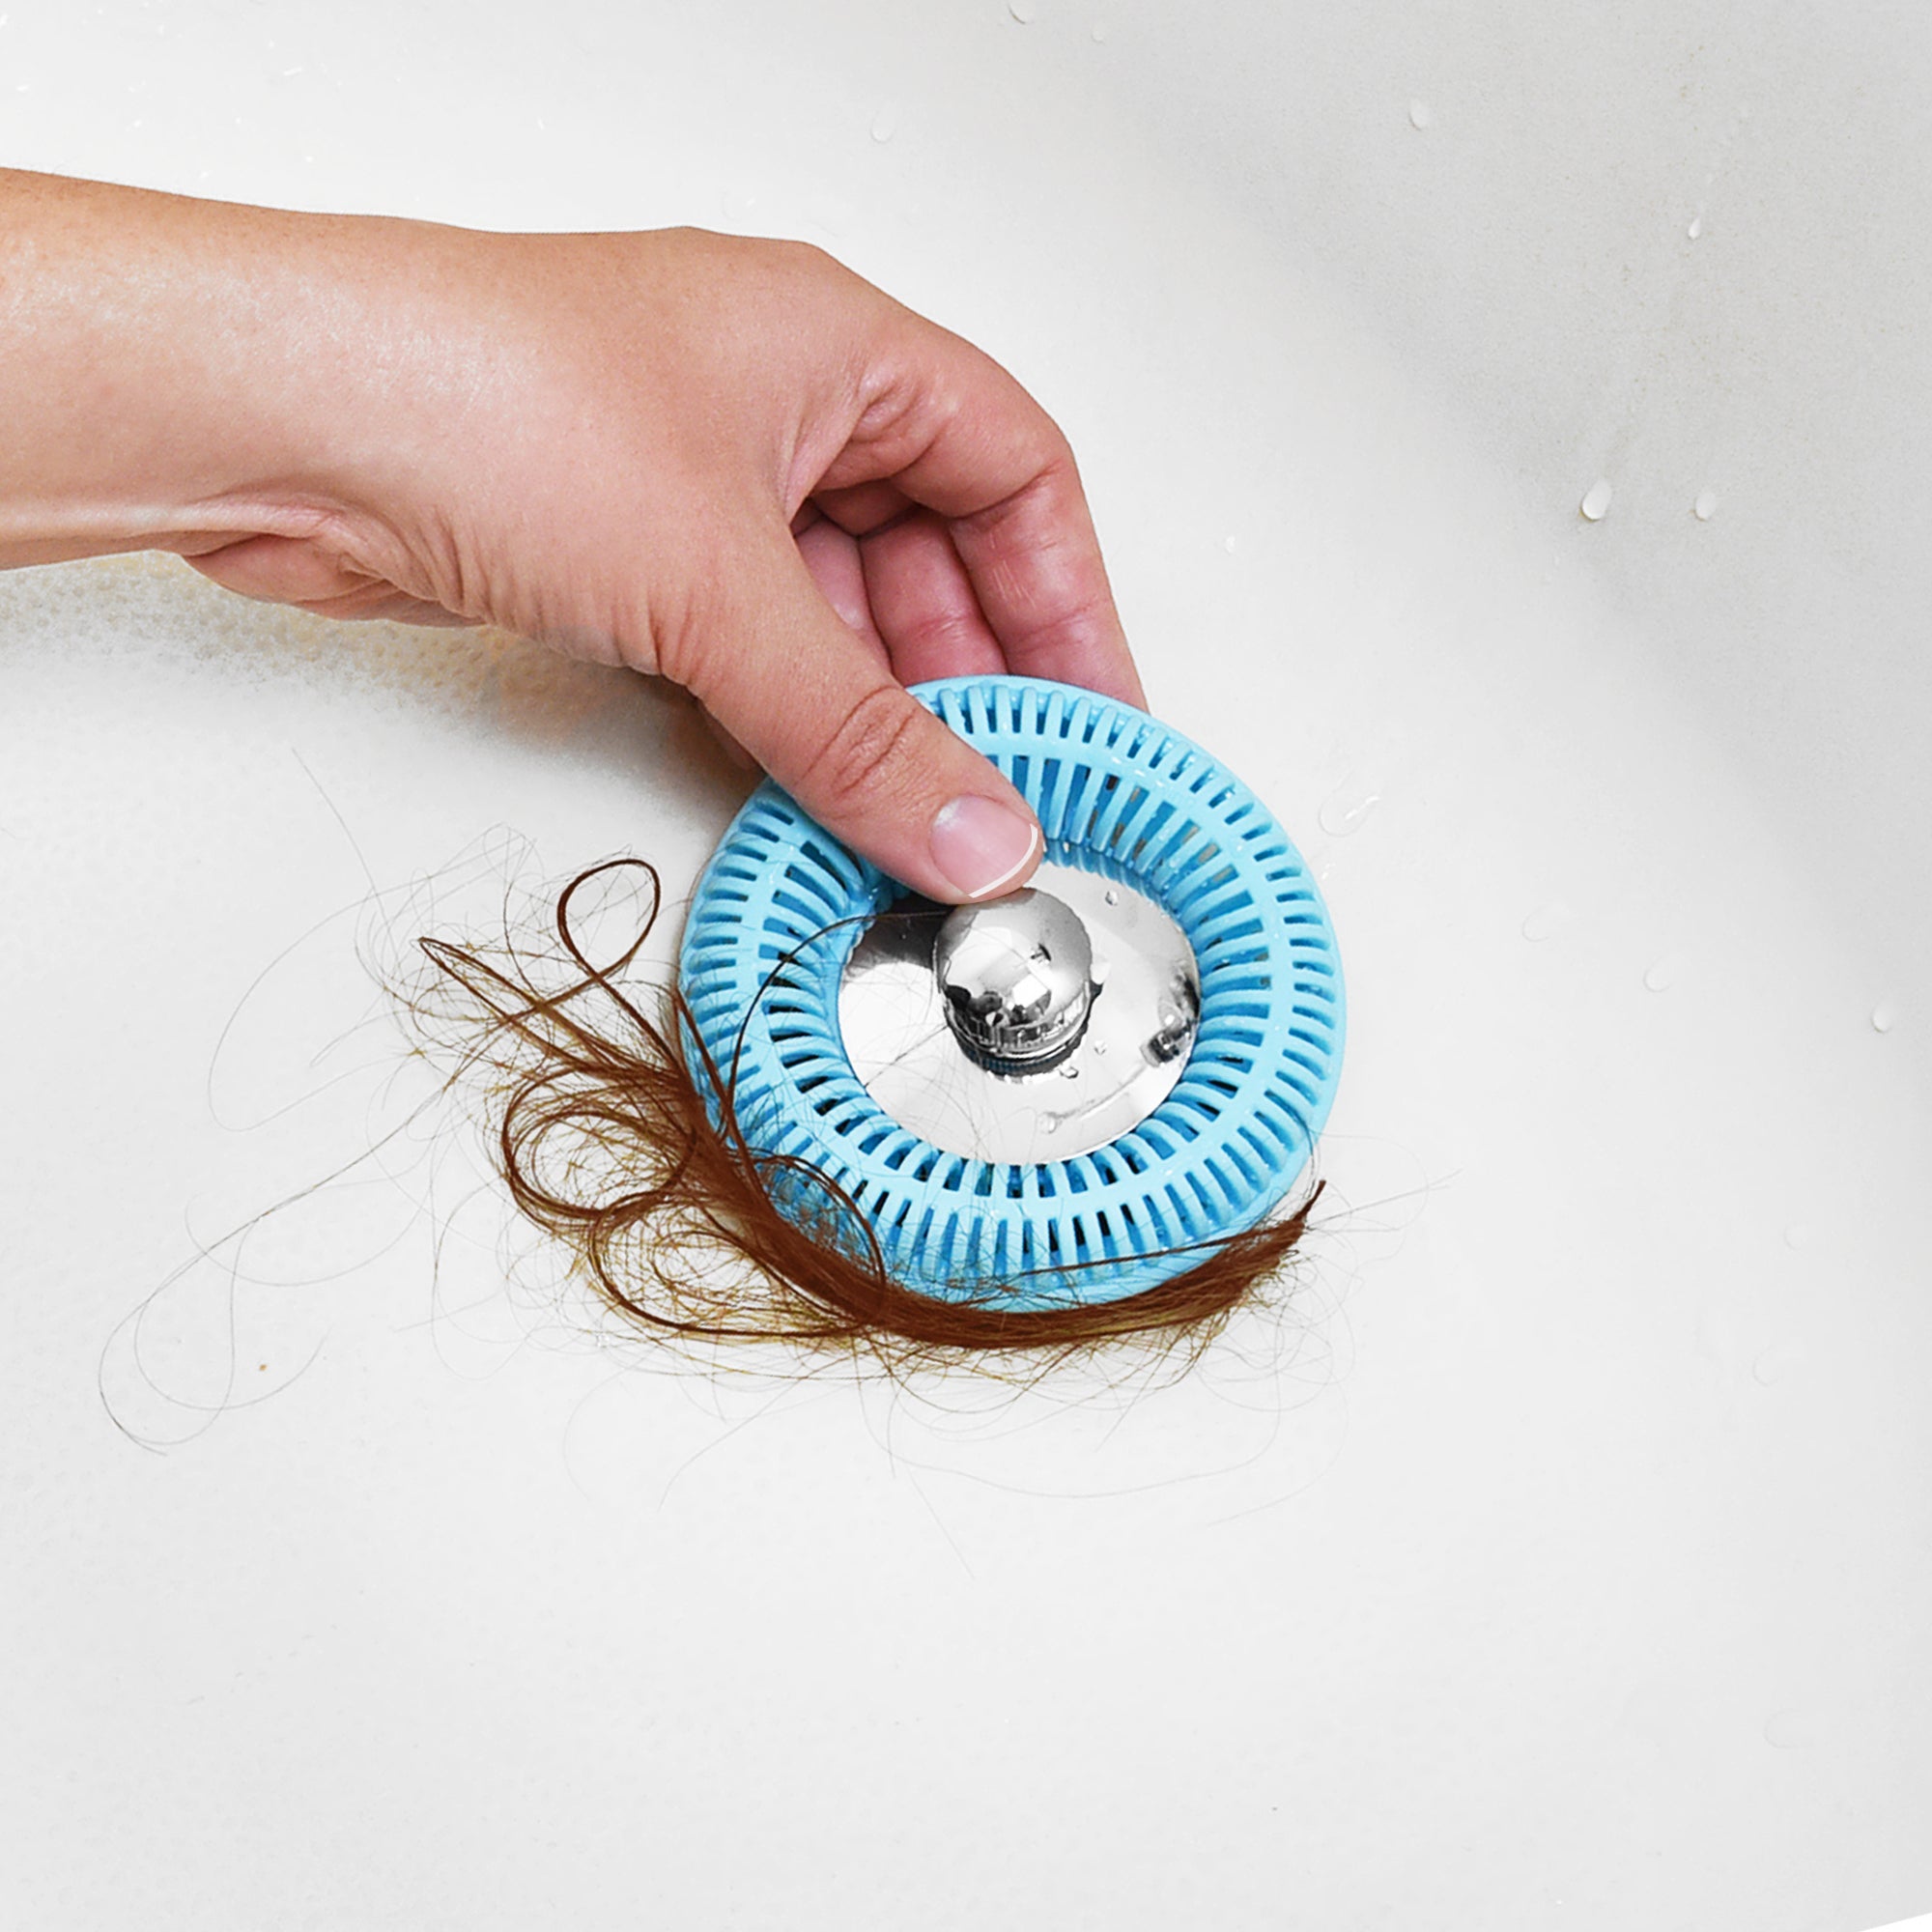 SINKRING The Ultimate Bathroom Sink Drain Protector Hair Catcher